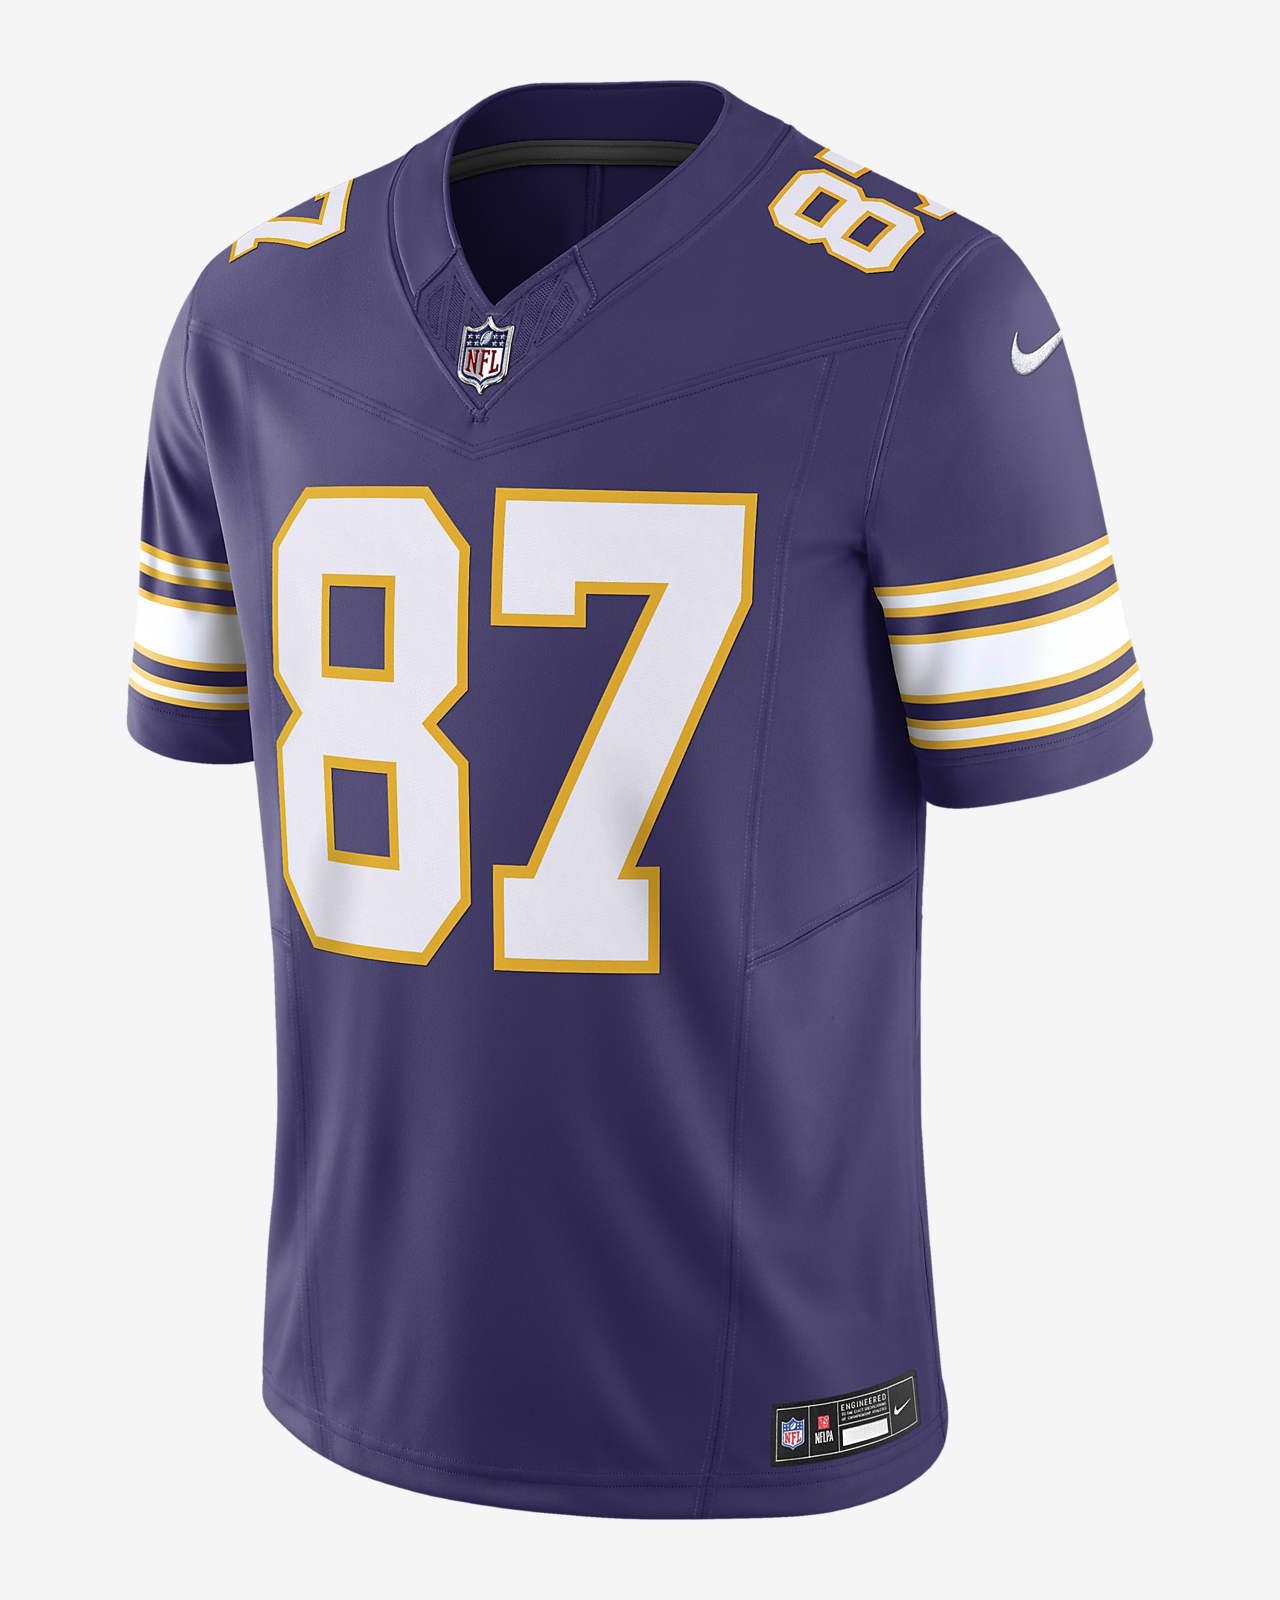 T.J. Hockenson Minnesota Vikings Men's Nike Dri-FIT NFL Limited ...